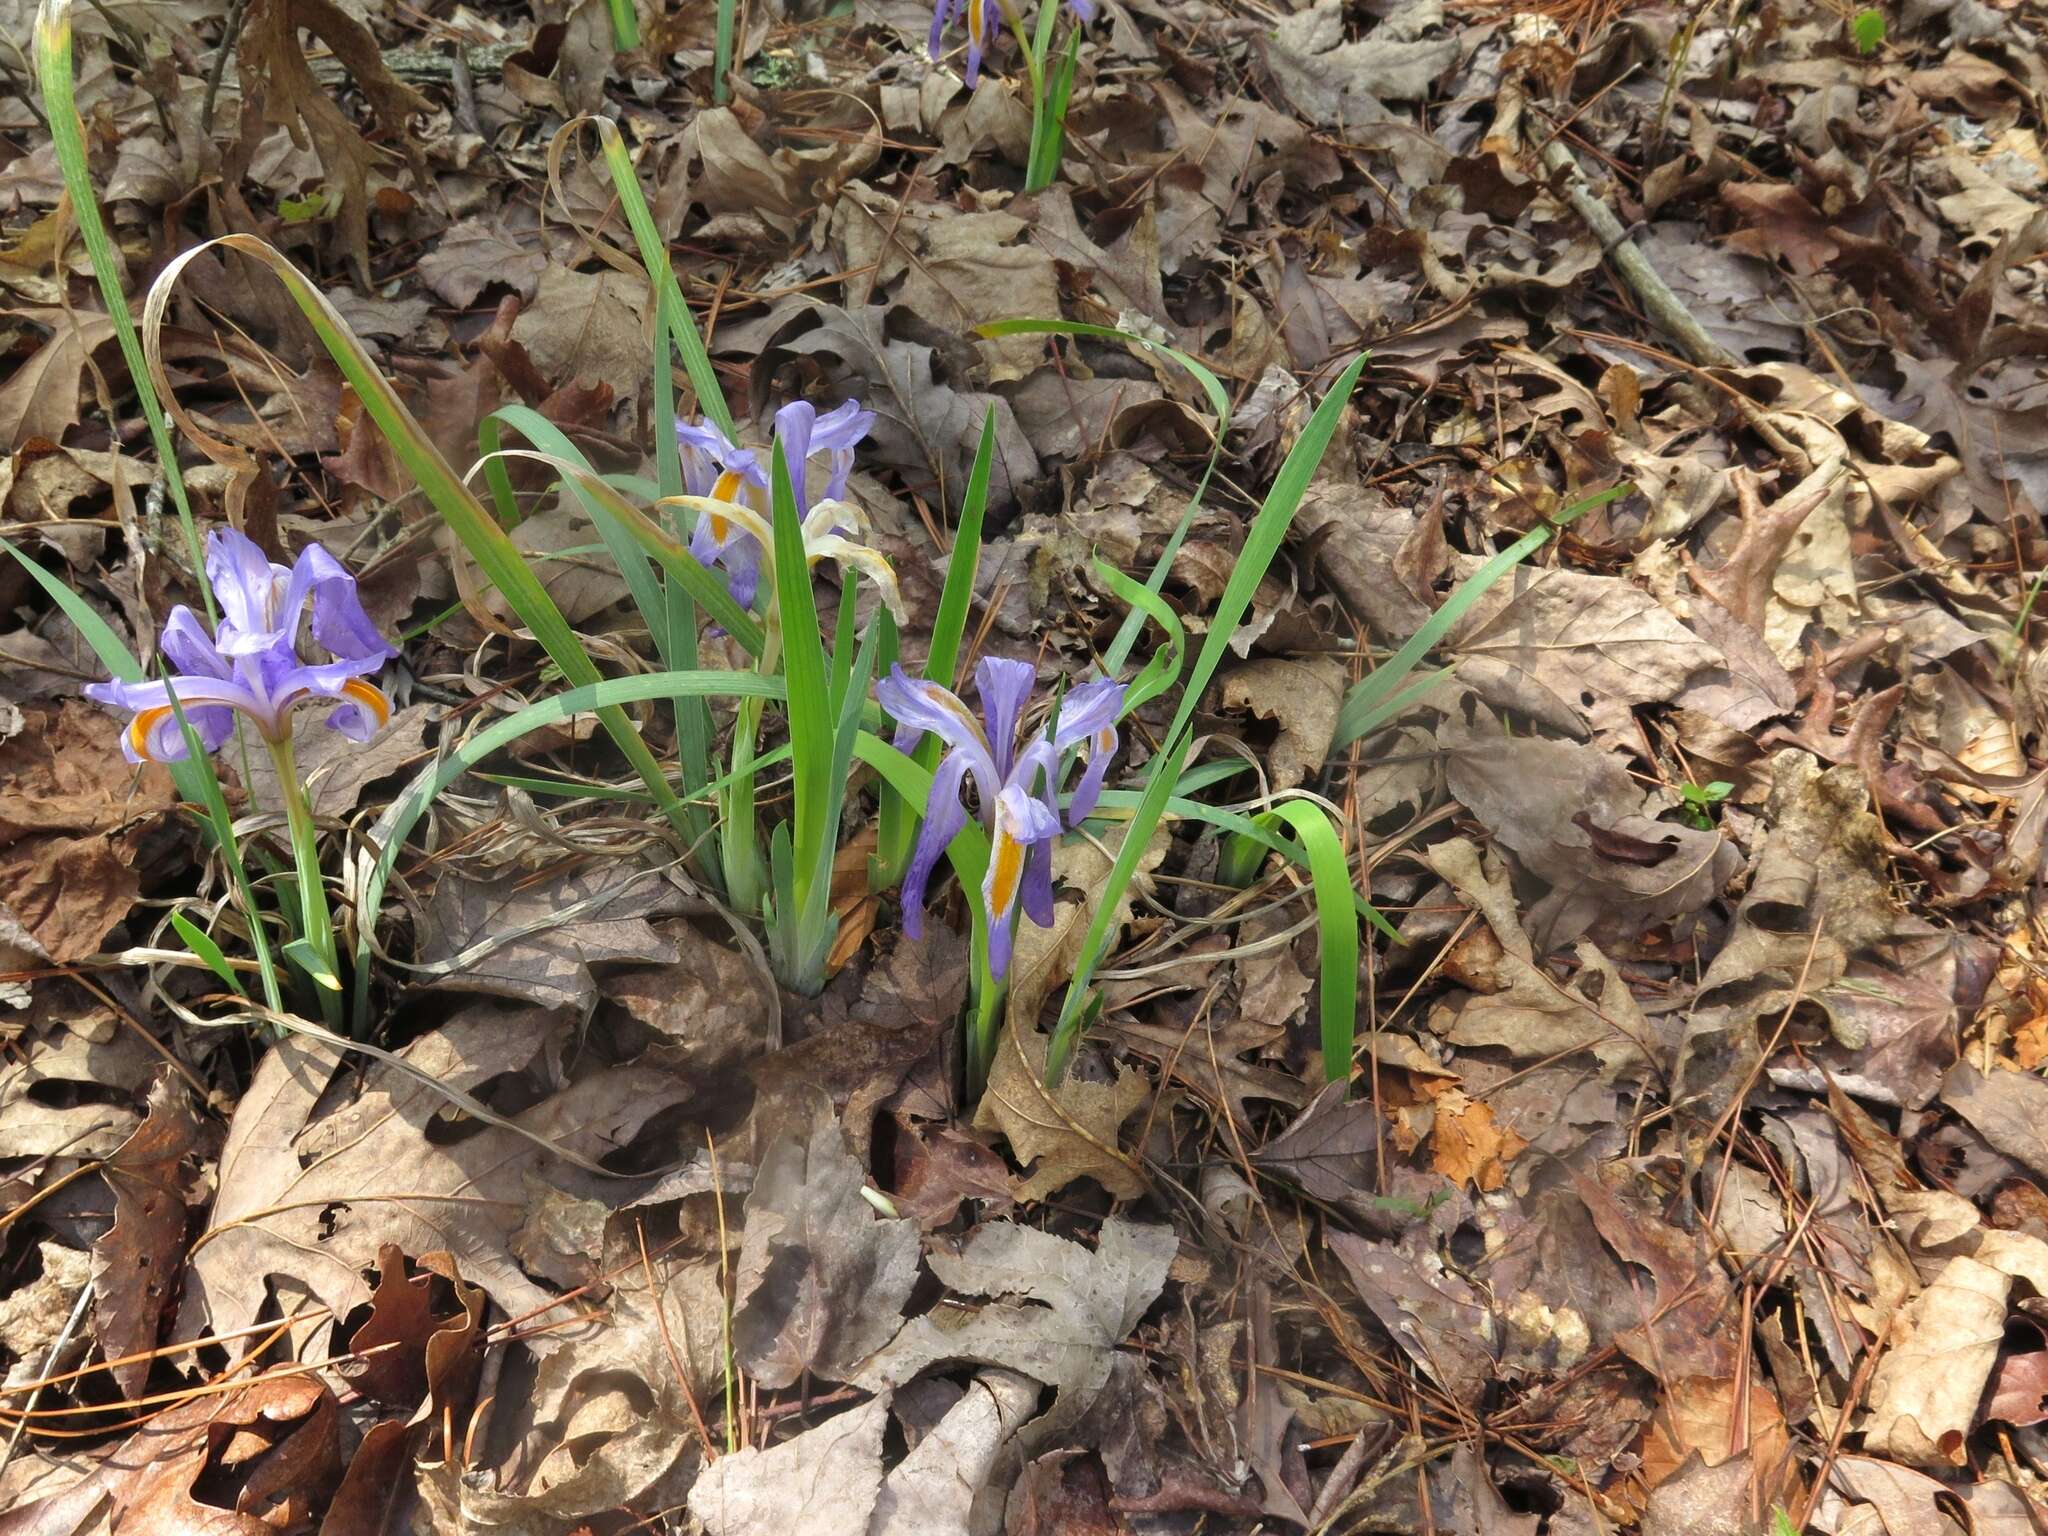 Sivun Iris verna var. smalliana Fernald ex M. E. Edwards kuva